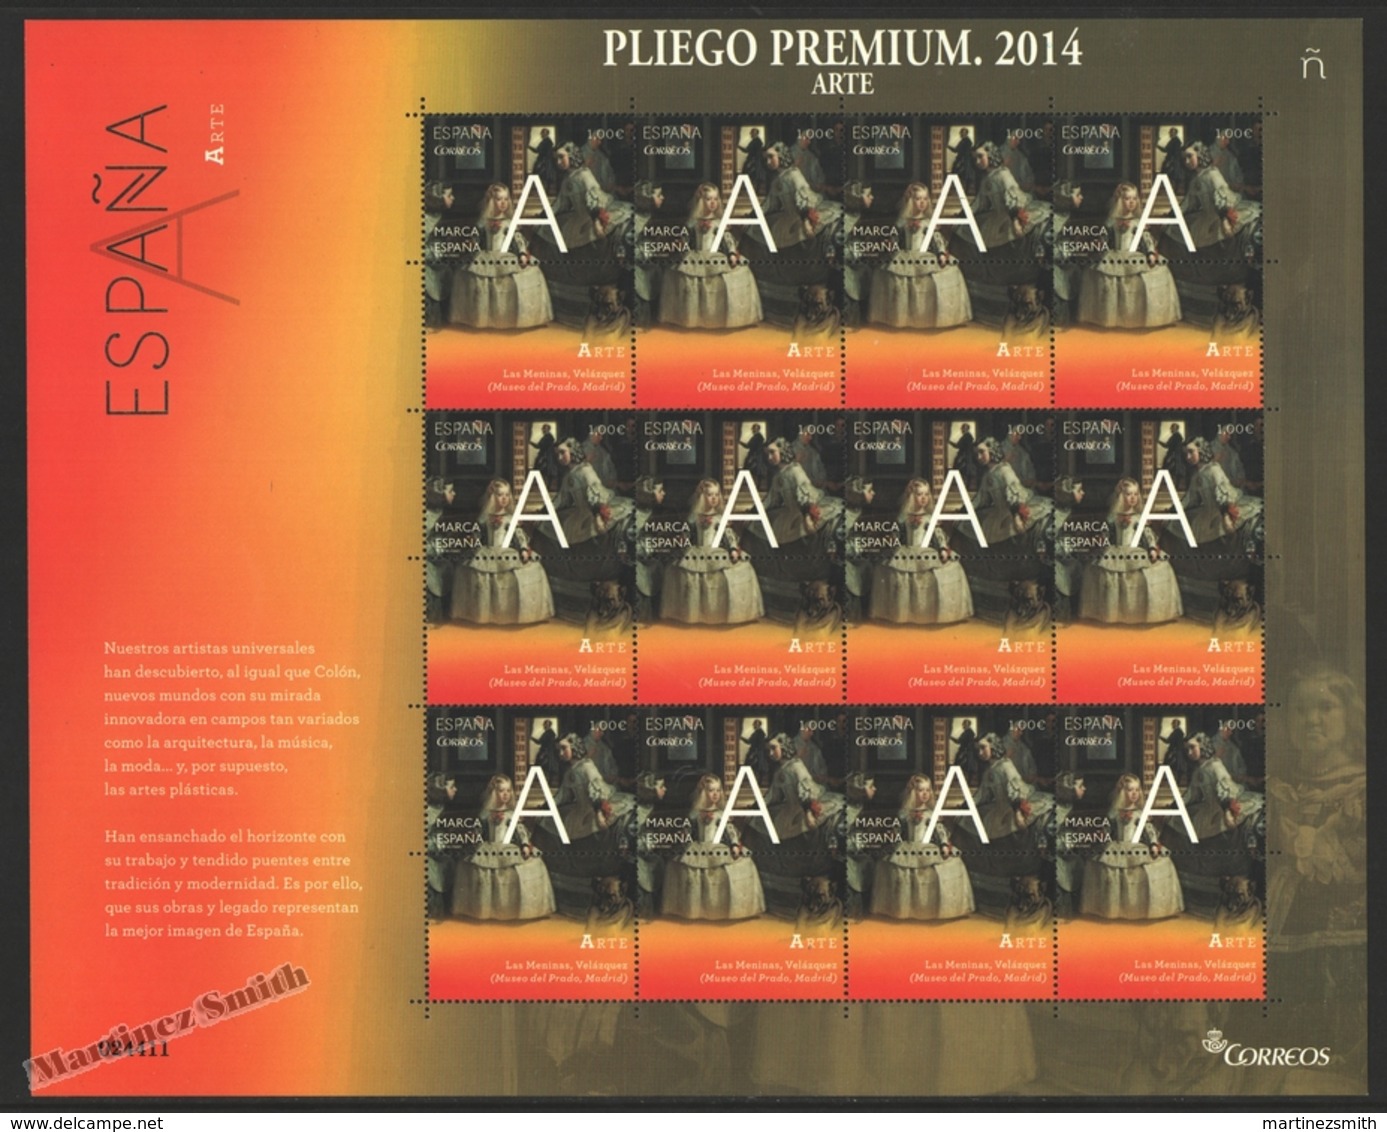 Espagne - Spain - España - Premium Sheet 2014 - 6 Sheets Letters Of Spain, ESPAÑA - MNH - Full Sheets